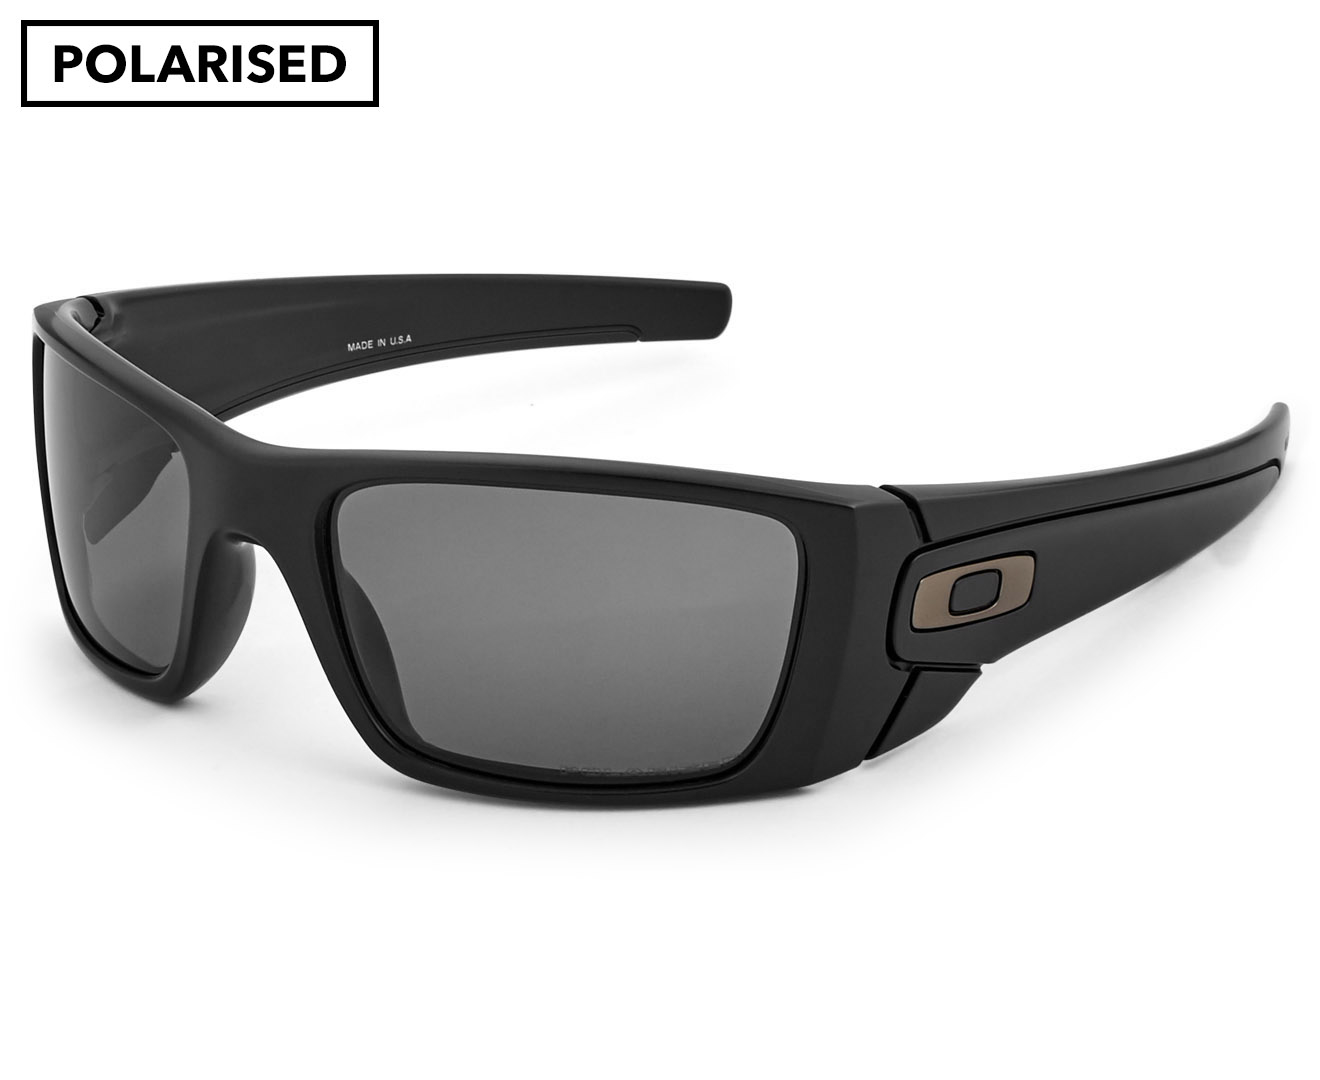 Oakley Men's Fuel Cell Polarised Sunglasses - Matte Black/Grey |  